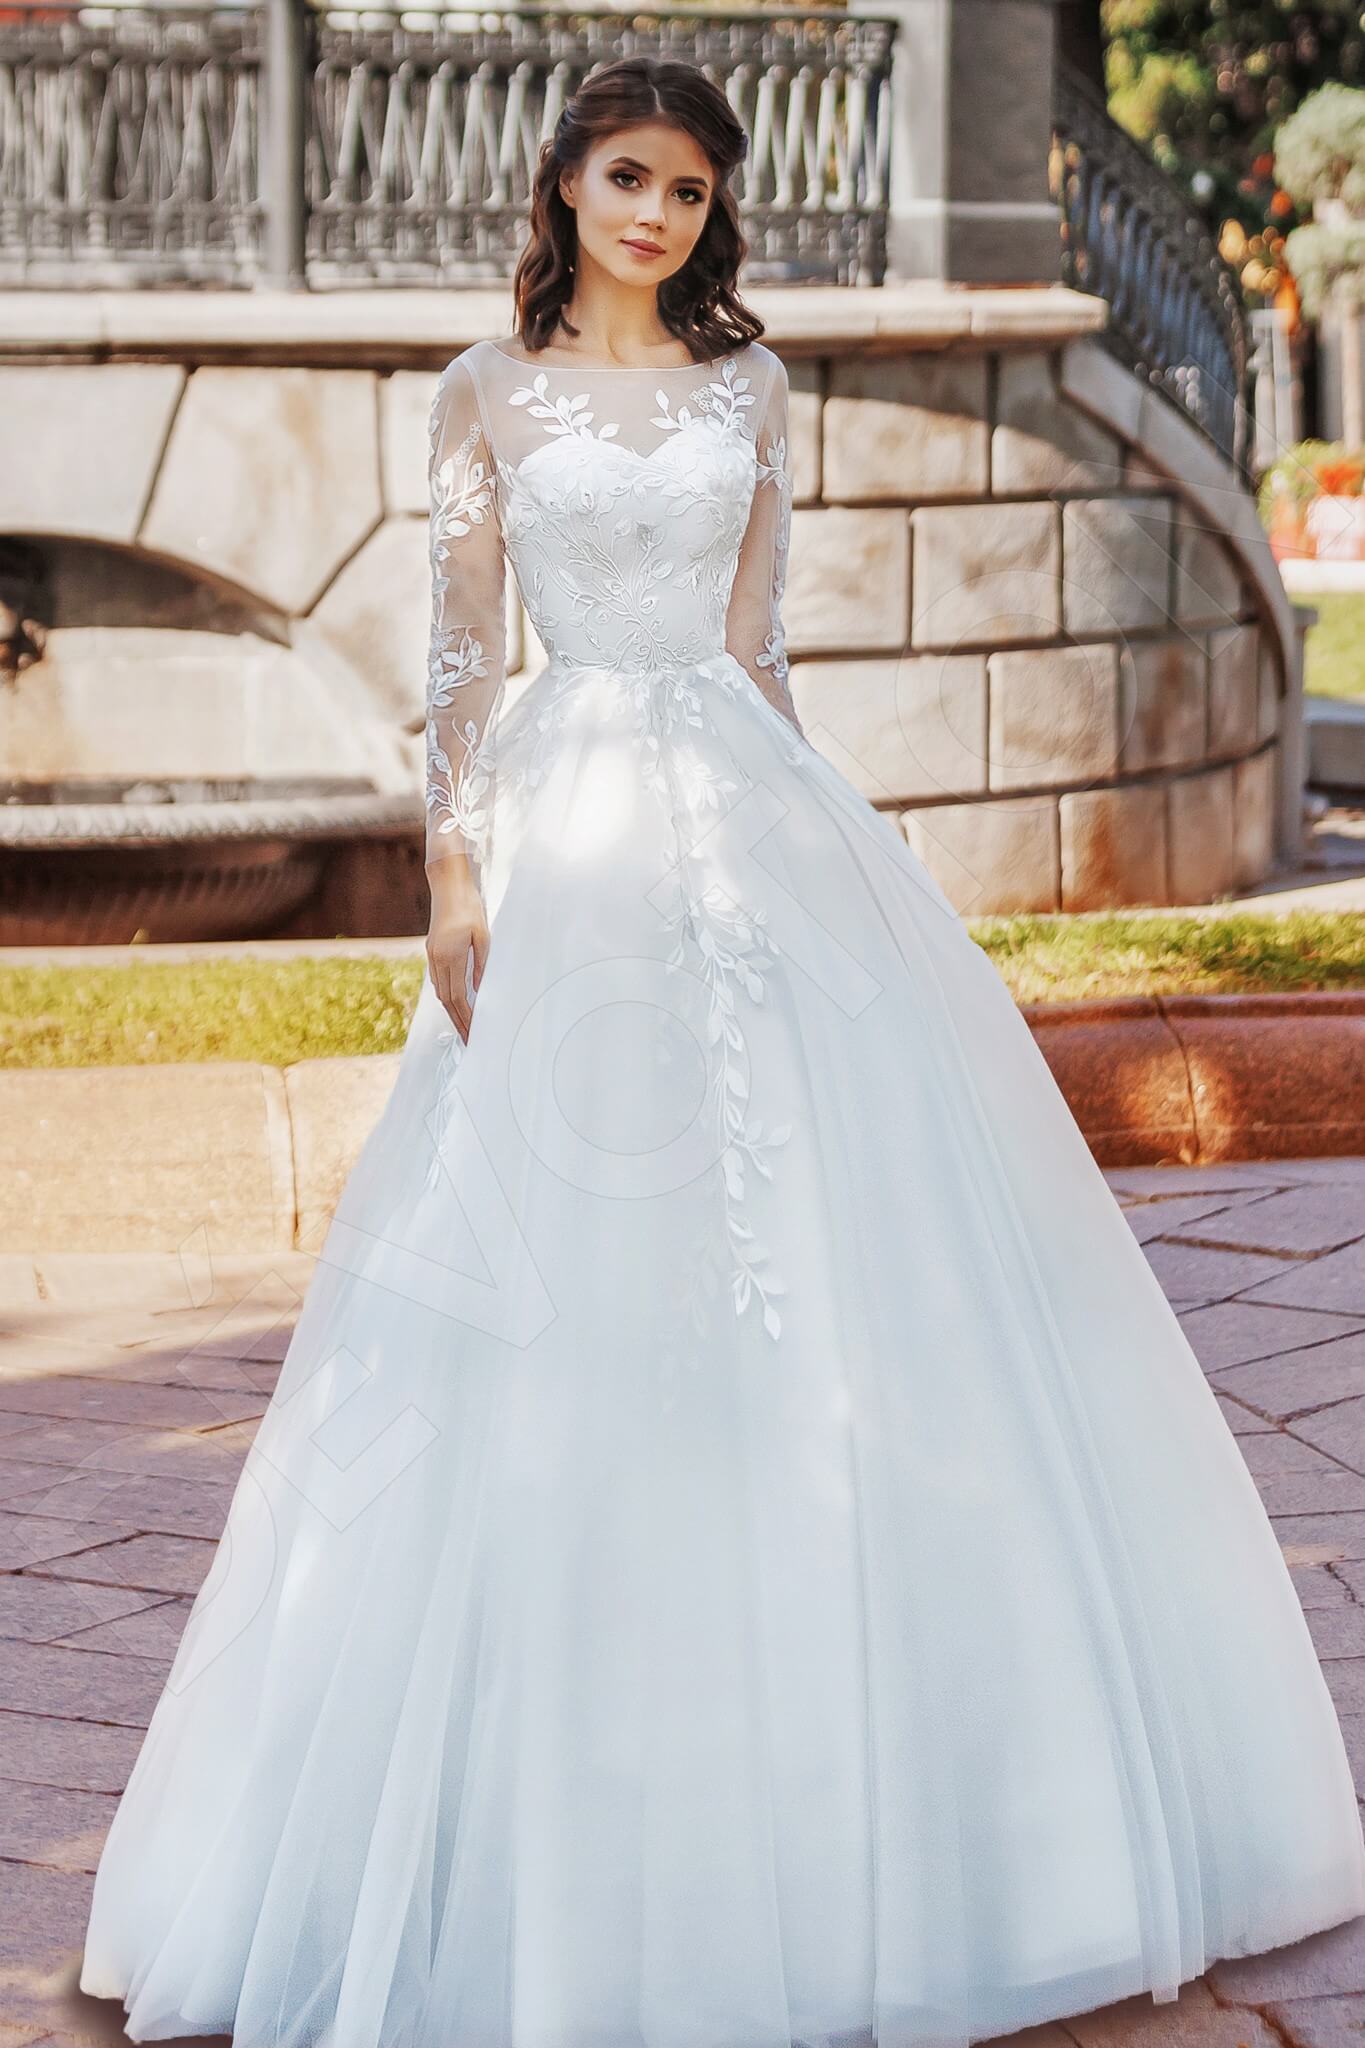 Villosa Full back Princess/Ball Gown Long sleeve Wedding Dress Front